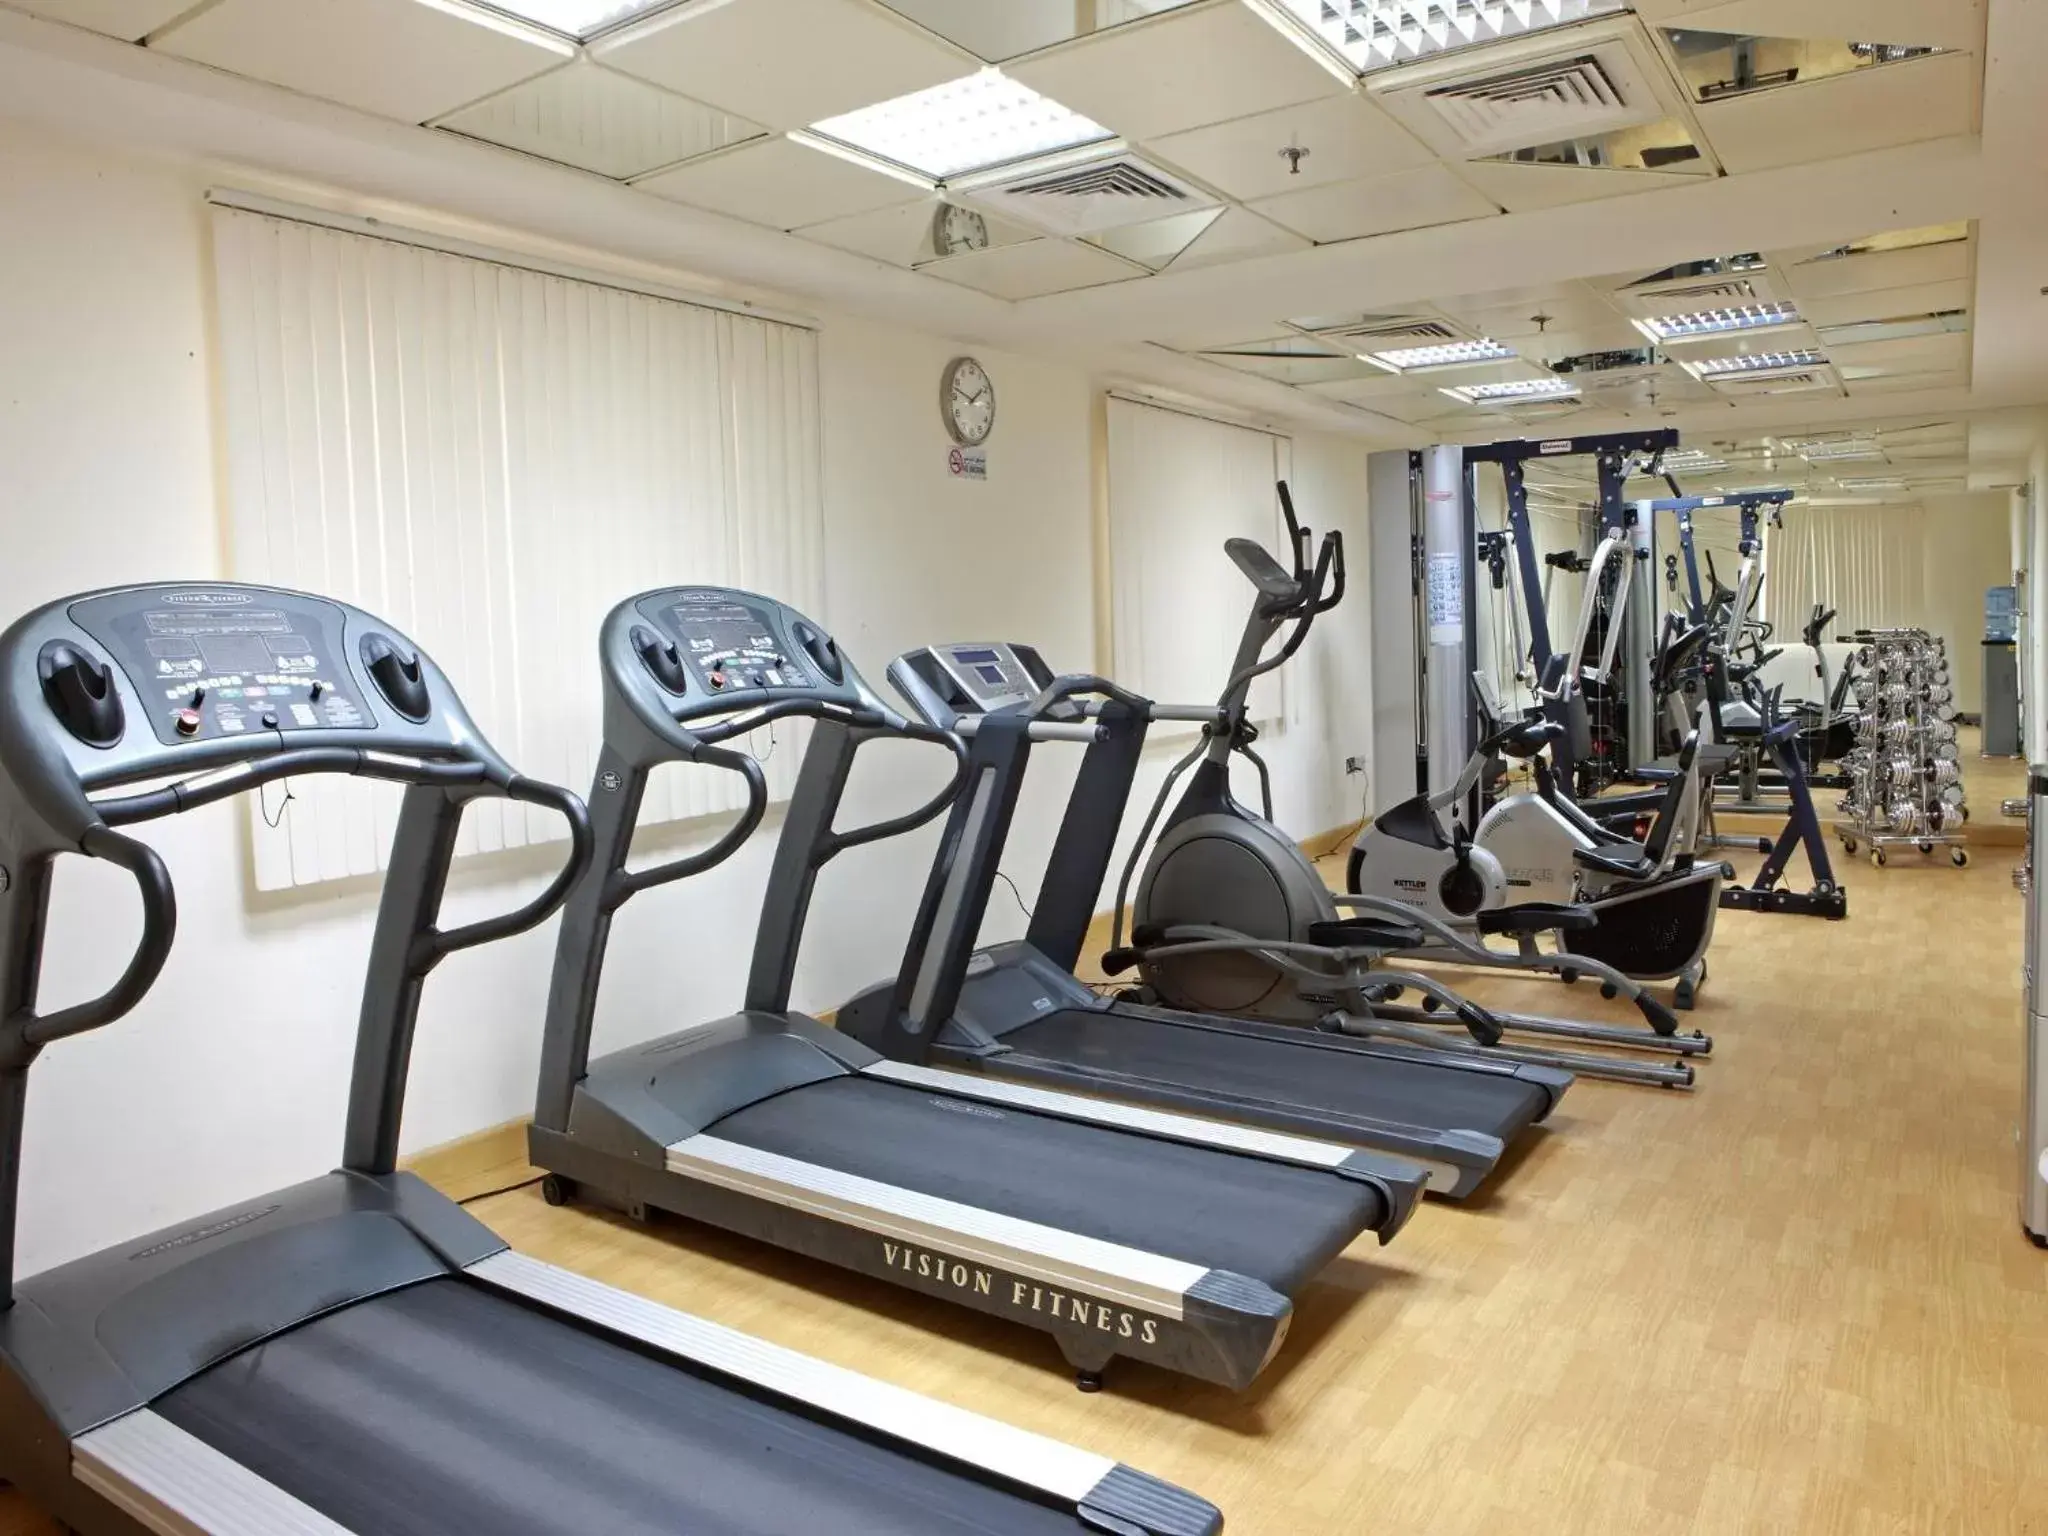 Fitness centre/facilities, Fitness Center/Facilities in Rose Garden Hotel Apartments - Bur Dubai